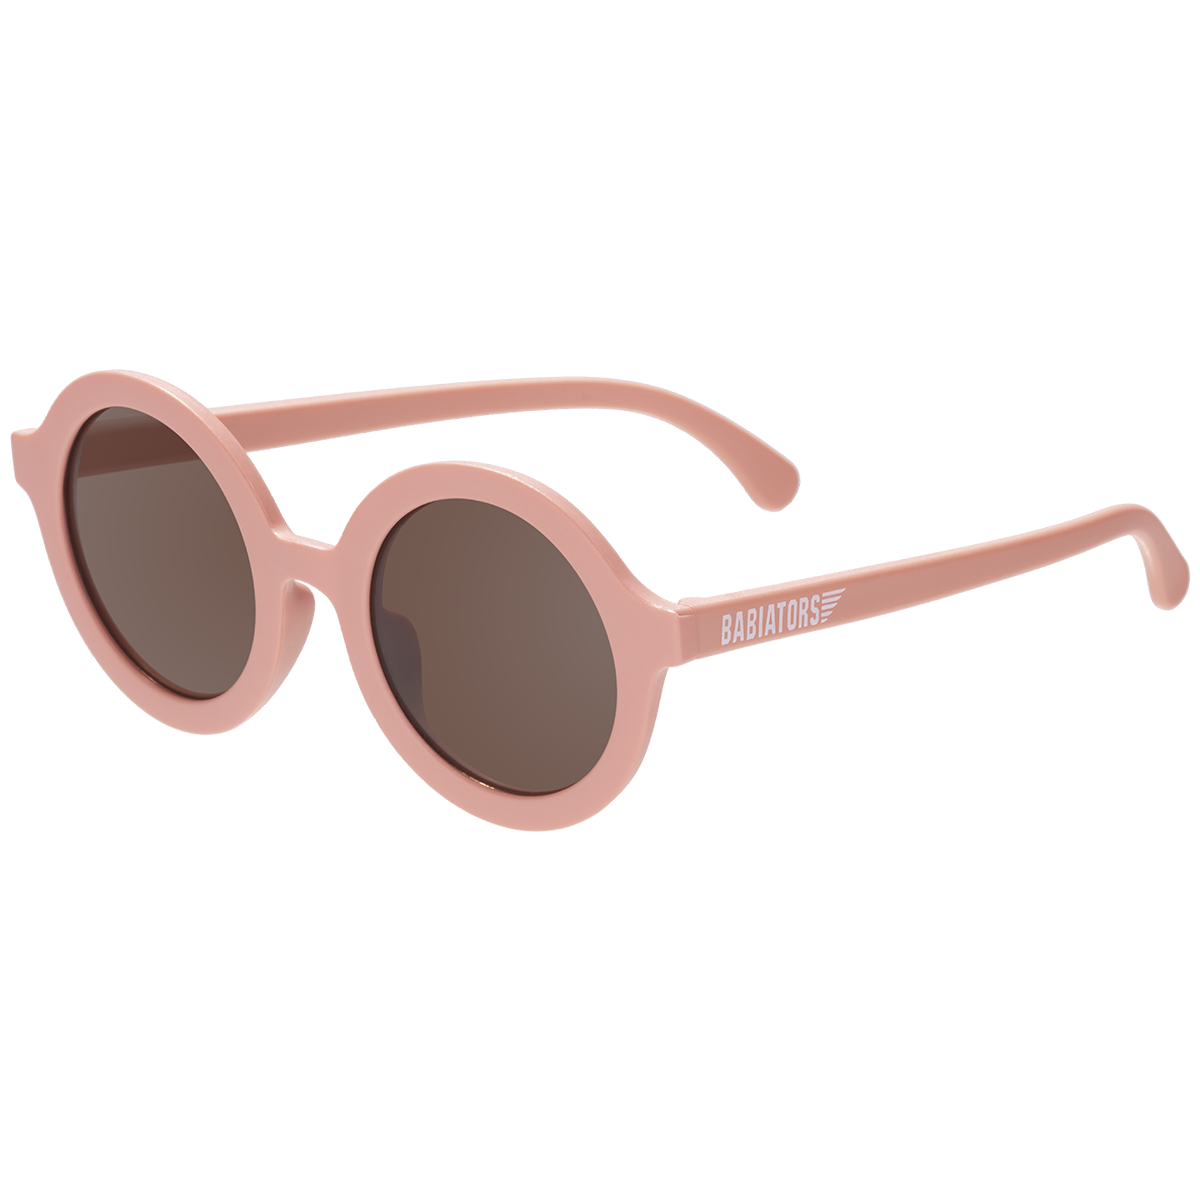 Euro Round Sunglasses | Peachy Keen